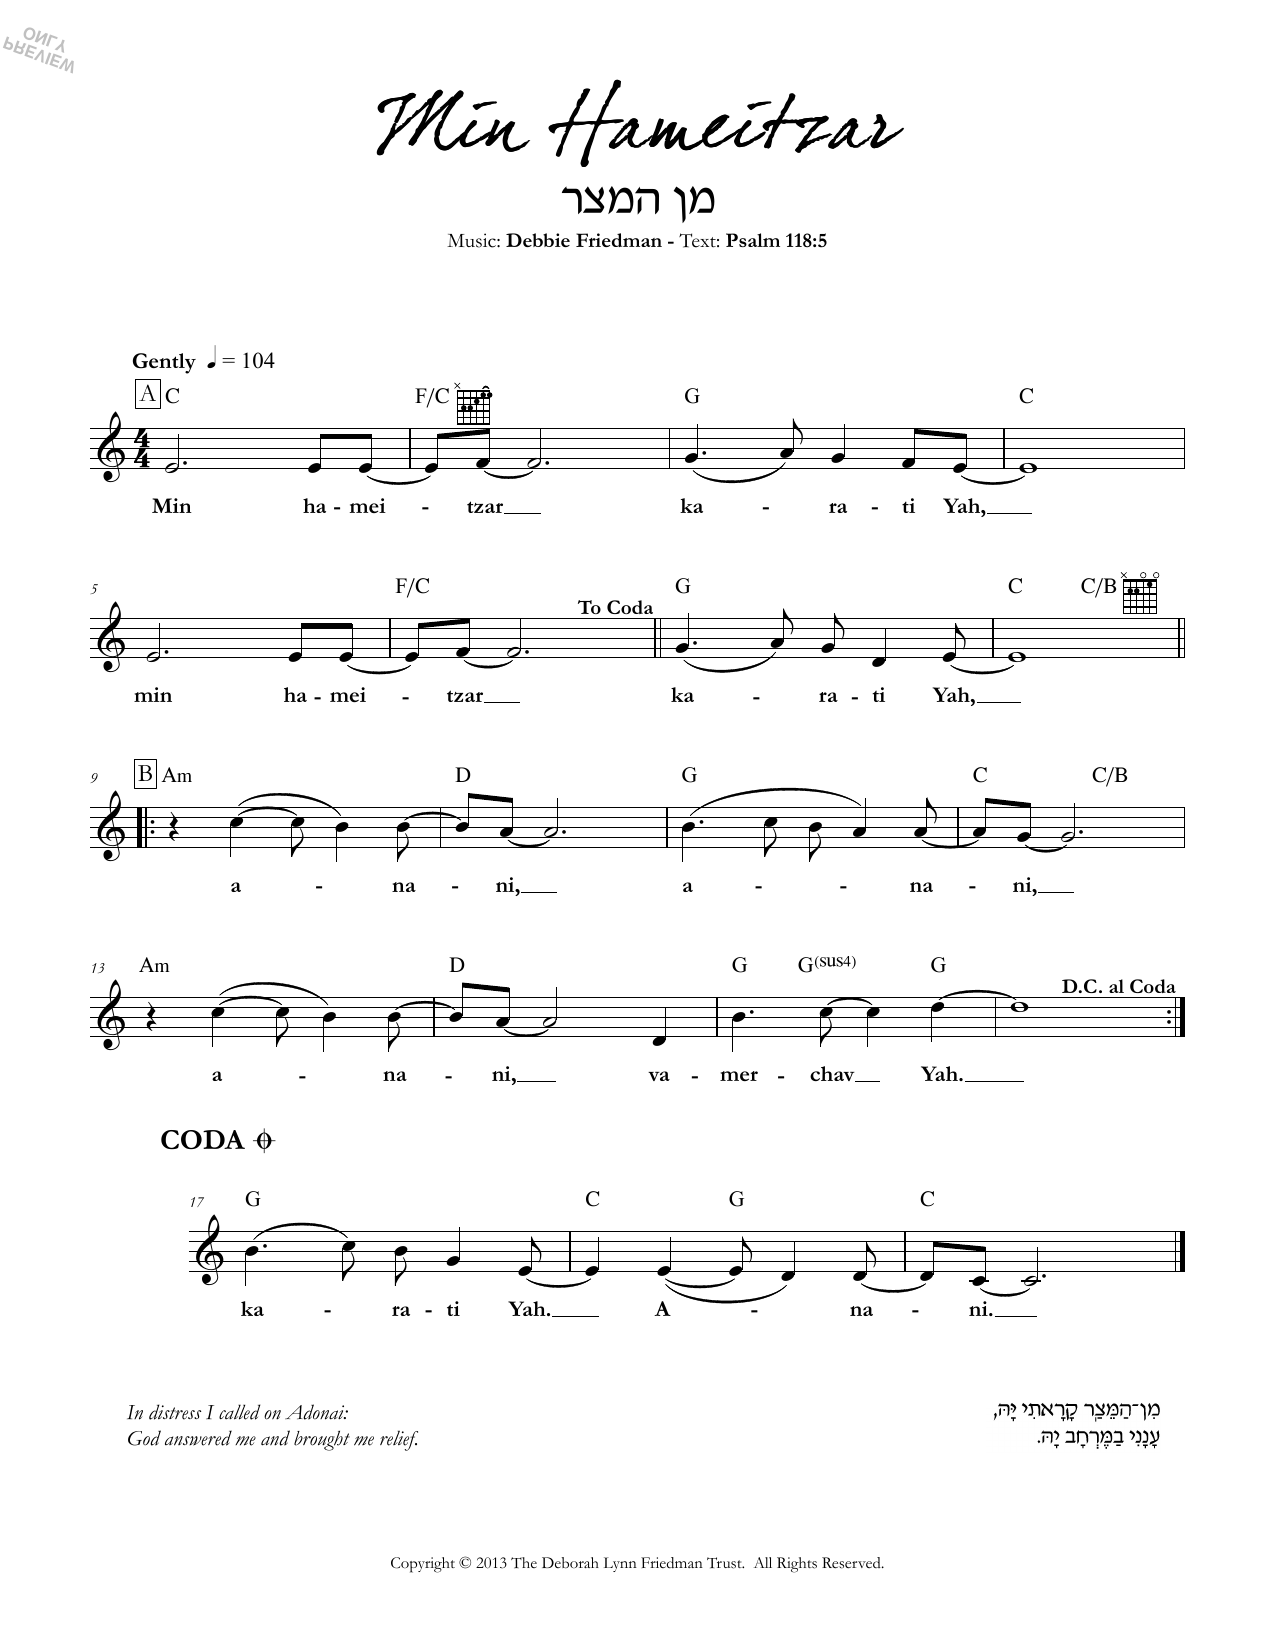 Download Debbie Friedman Min Hameitzar Sheet Music and learn how to play Lead Sheet / Fake Book PDF digital score in minutes